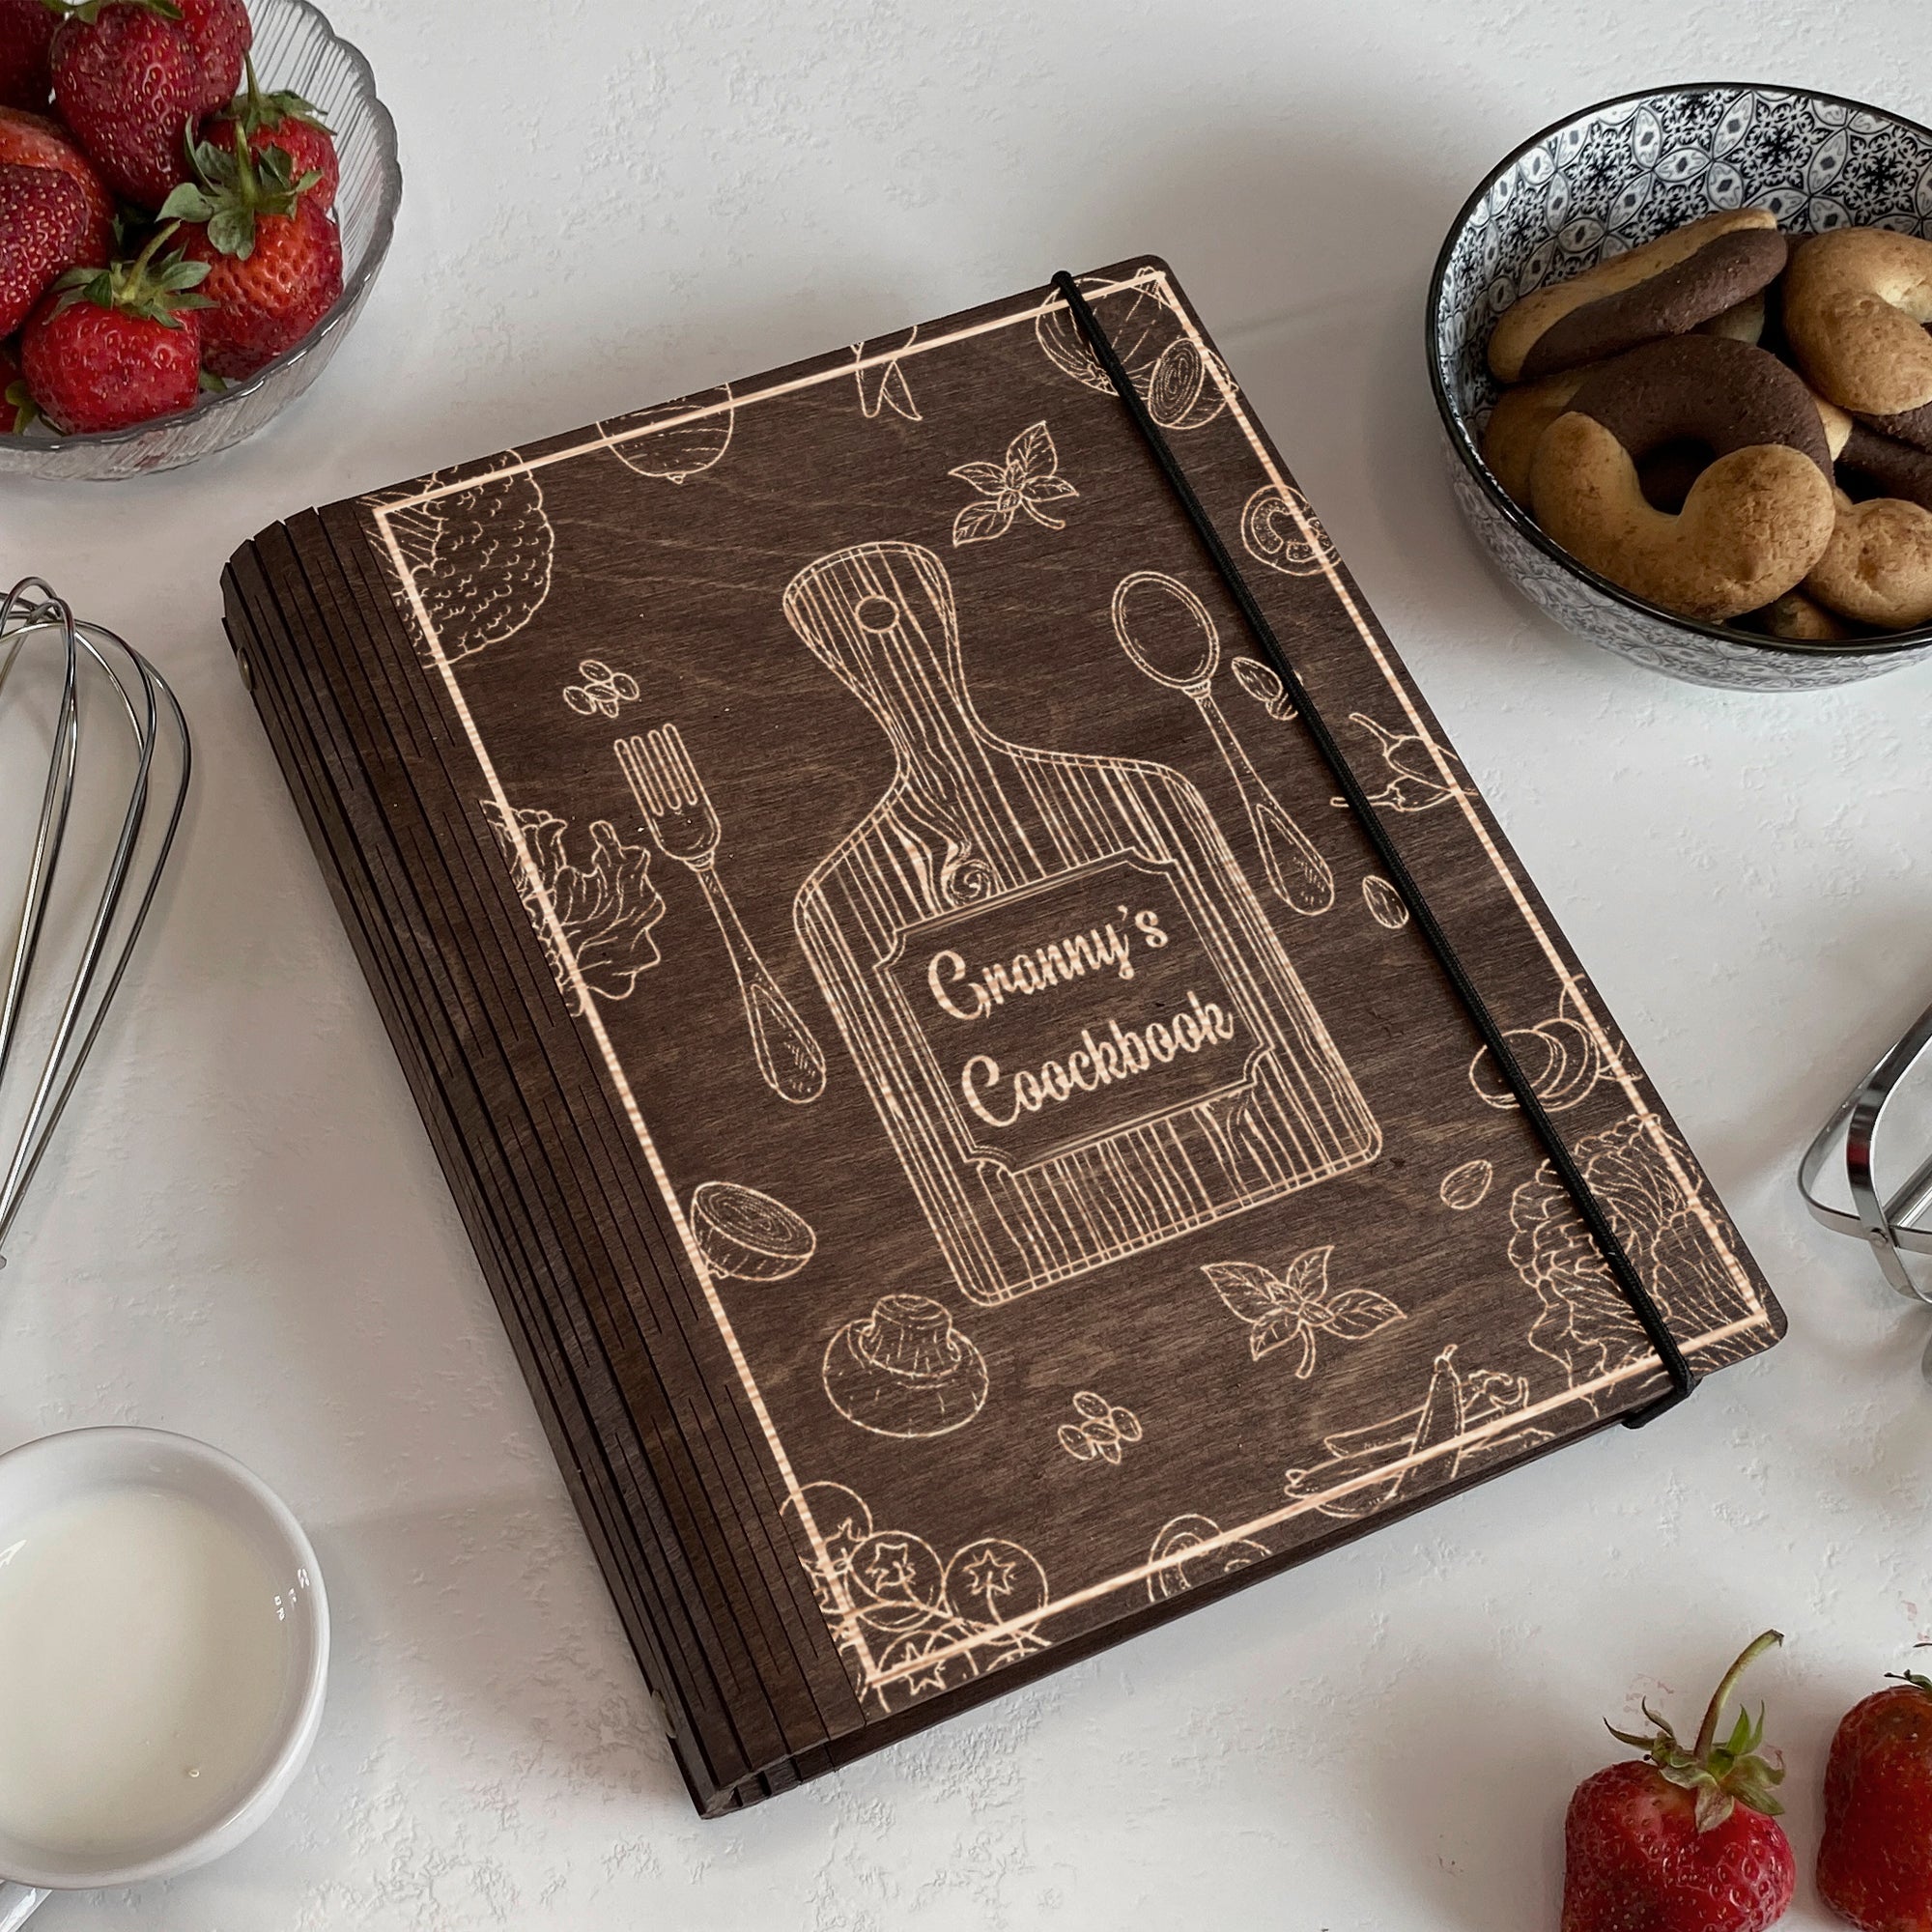 Grannys Cookbooks Free custom engraving